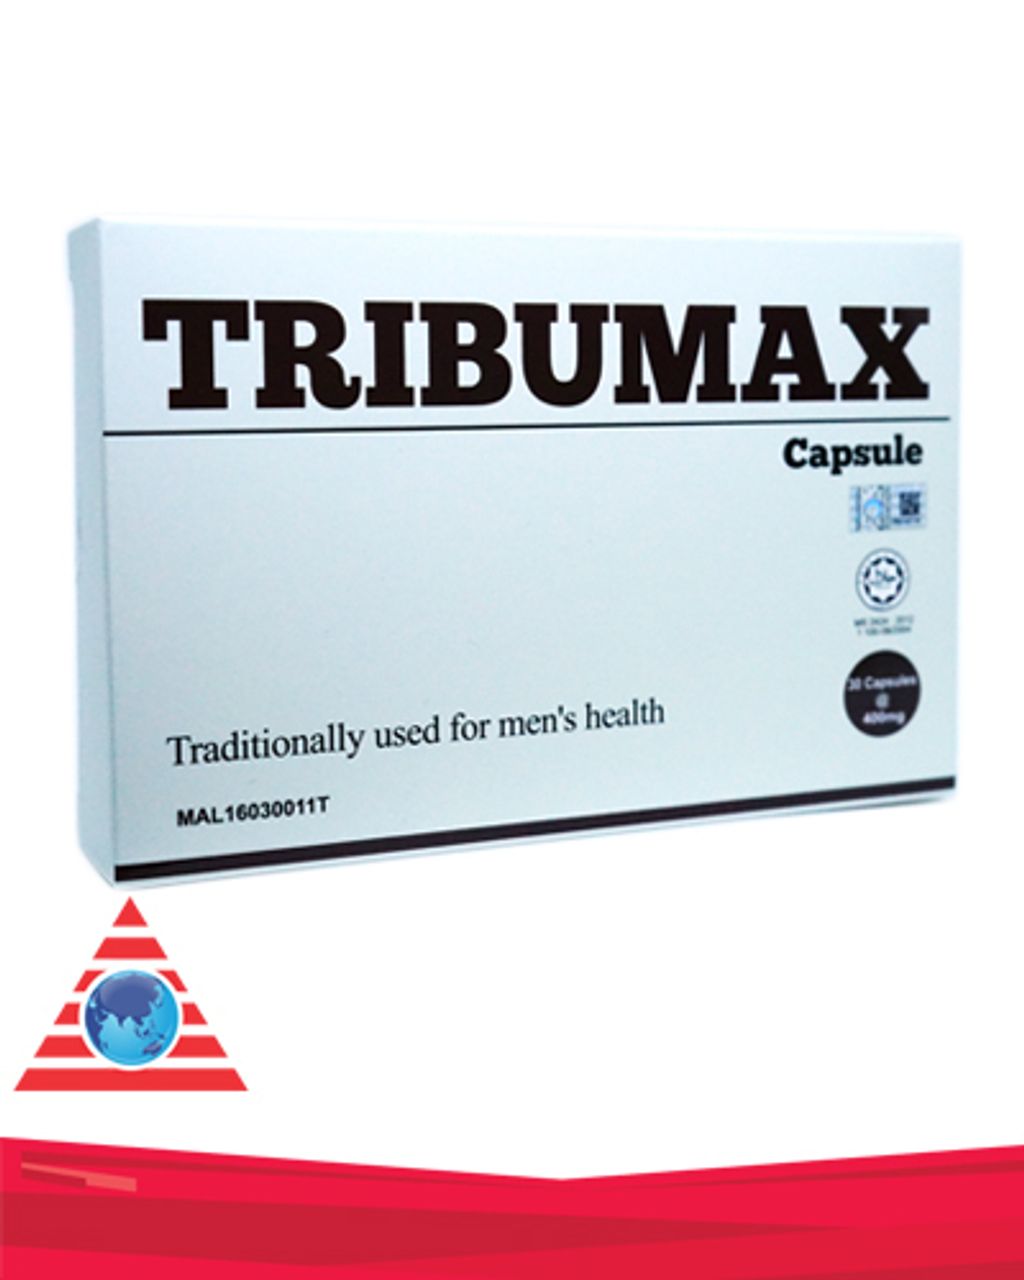 tribumax 1.jpg